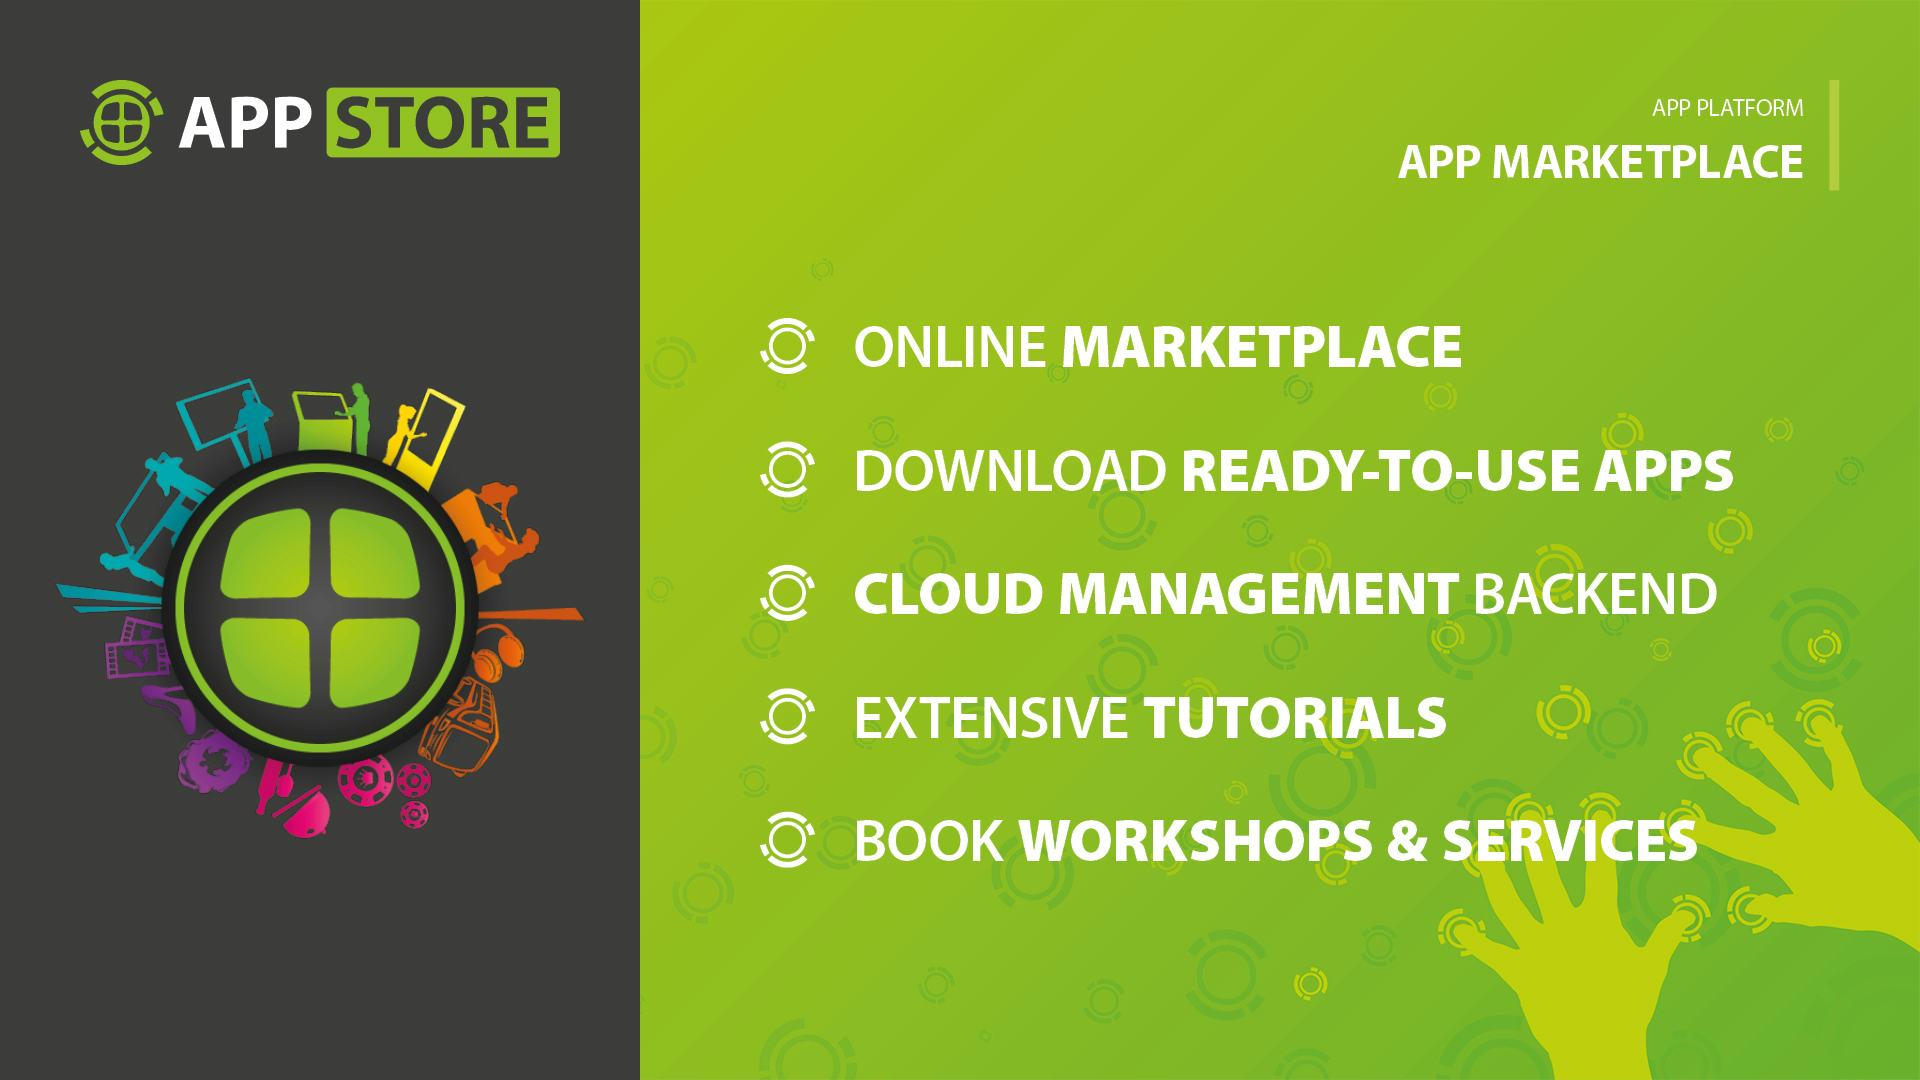 eyefactive AppSuite Software - Touchscreen App Platform: AppStore Marketplace